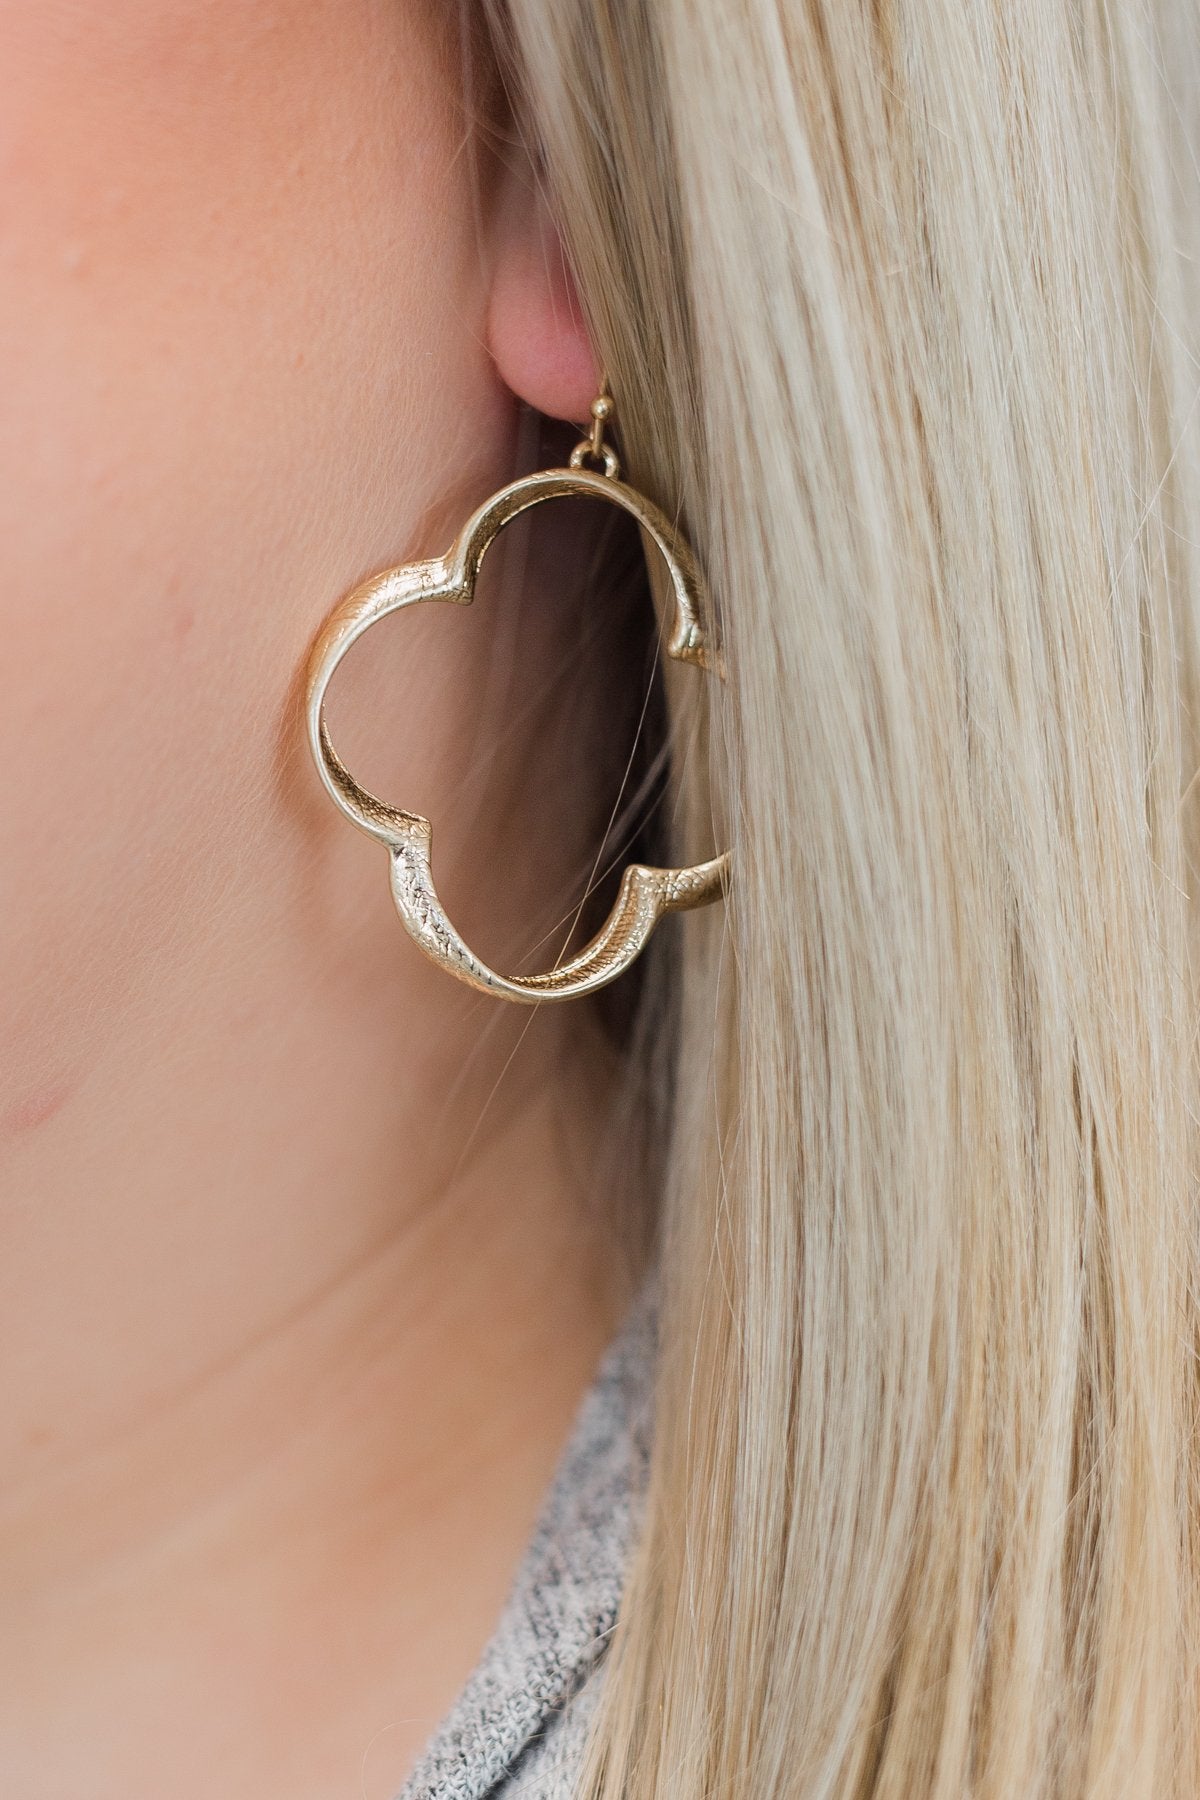 Simple & Pretty Earring Set- Gold